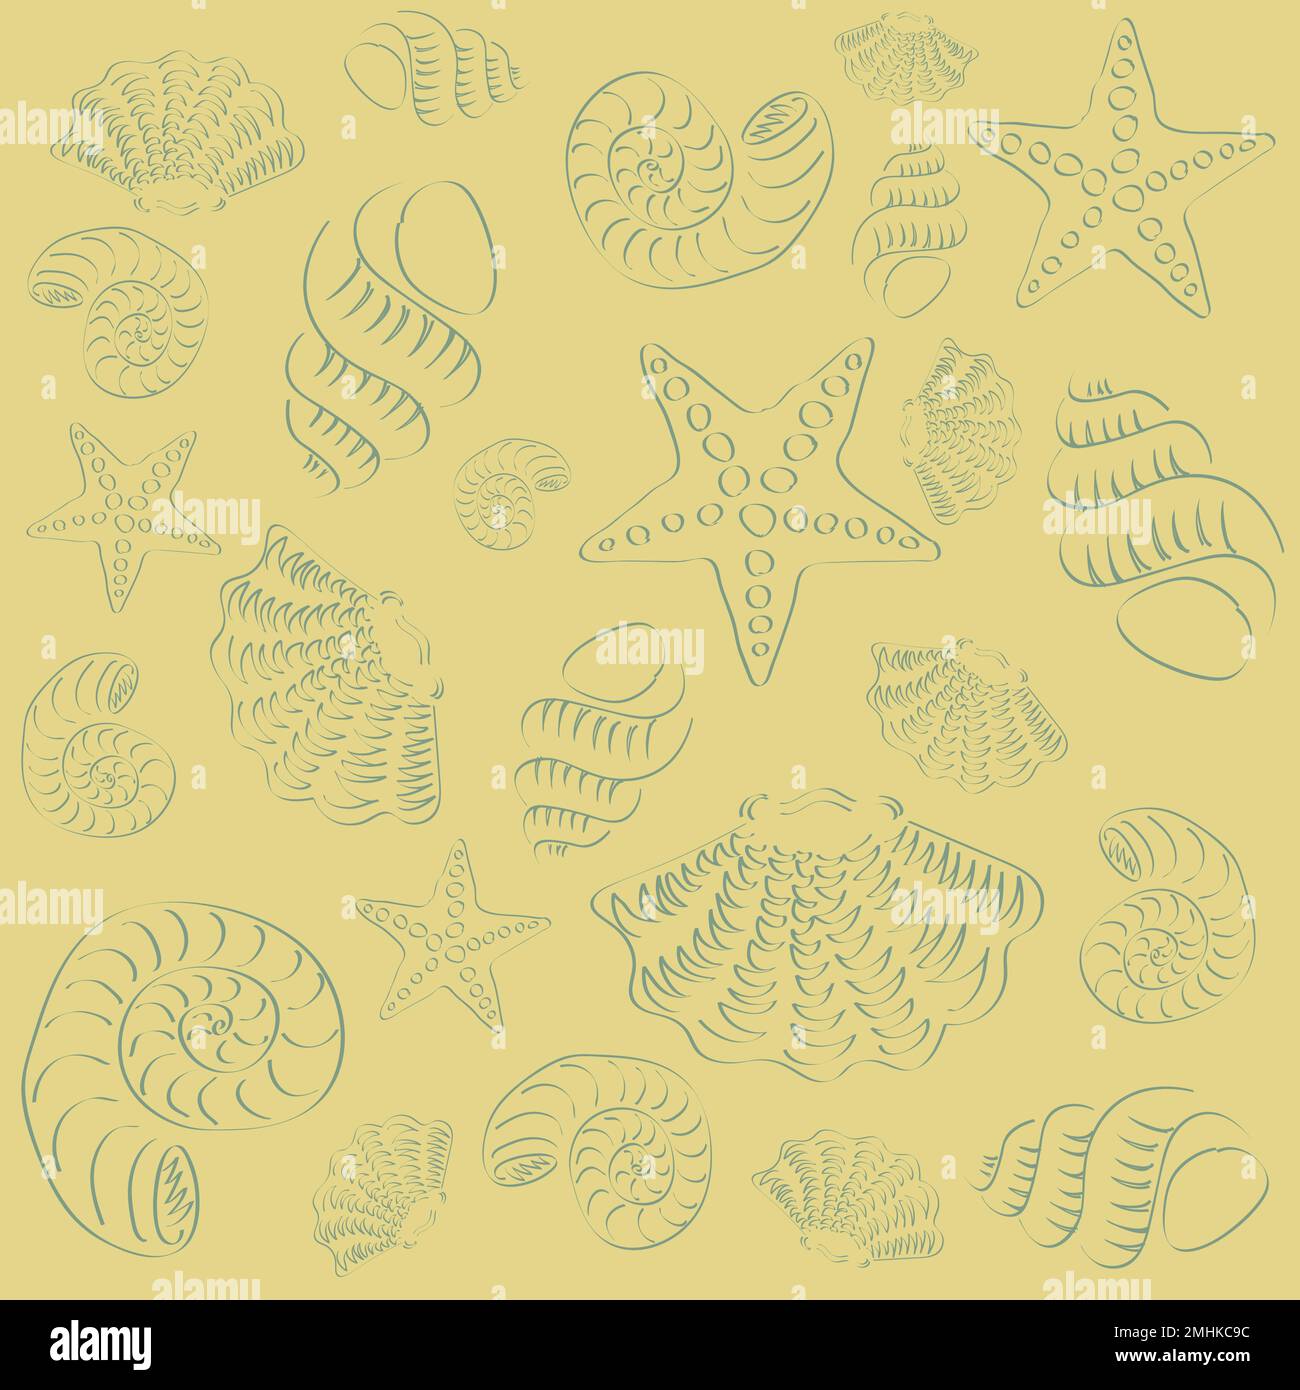 Sea shell decor stock photo. Image of hand, pattern, ethnic - 15107518